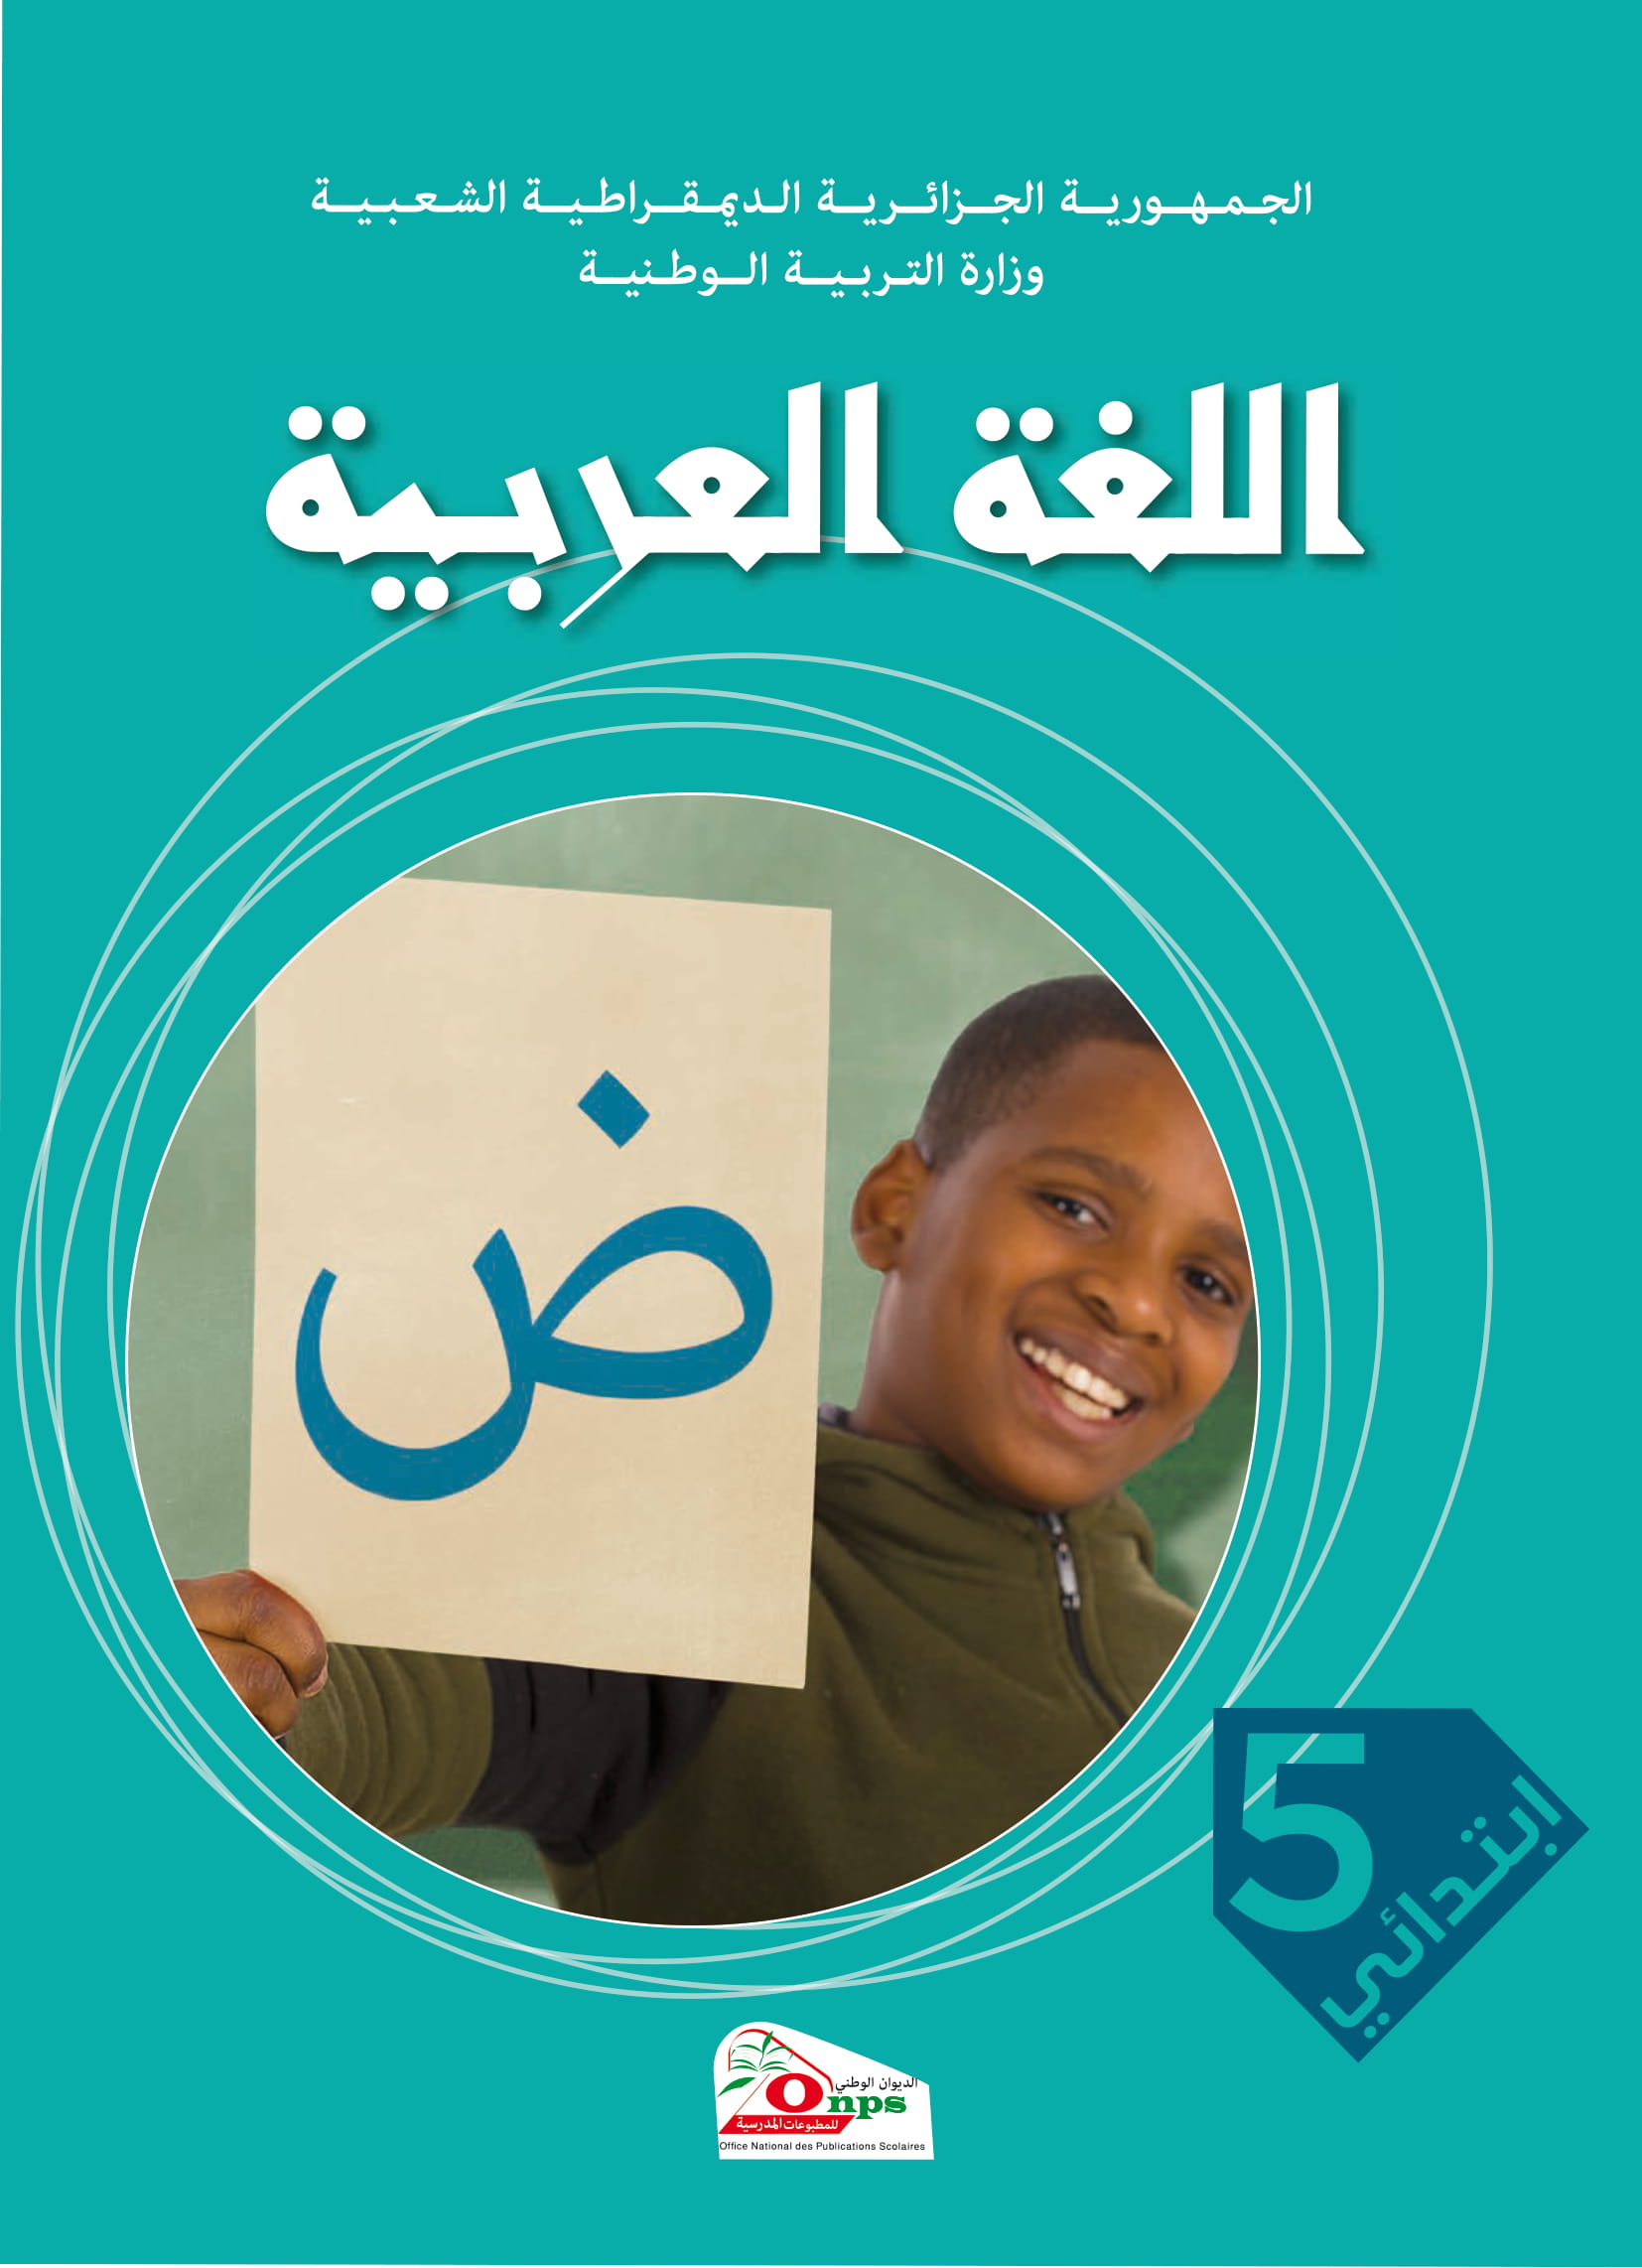 MS 501 Couverture Arabe 5Ap 1 - الديوان الوطني للمطبوعات المدرسية